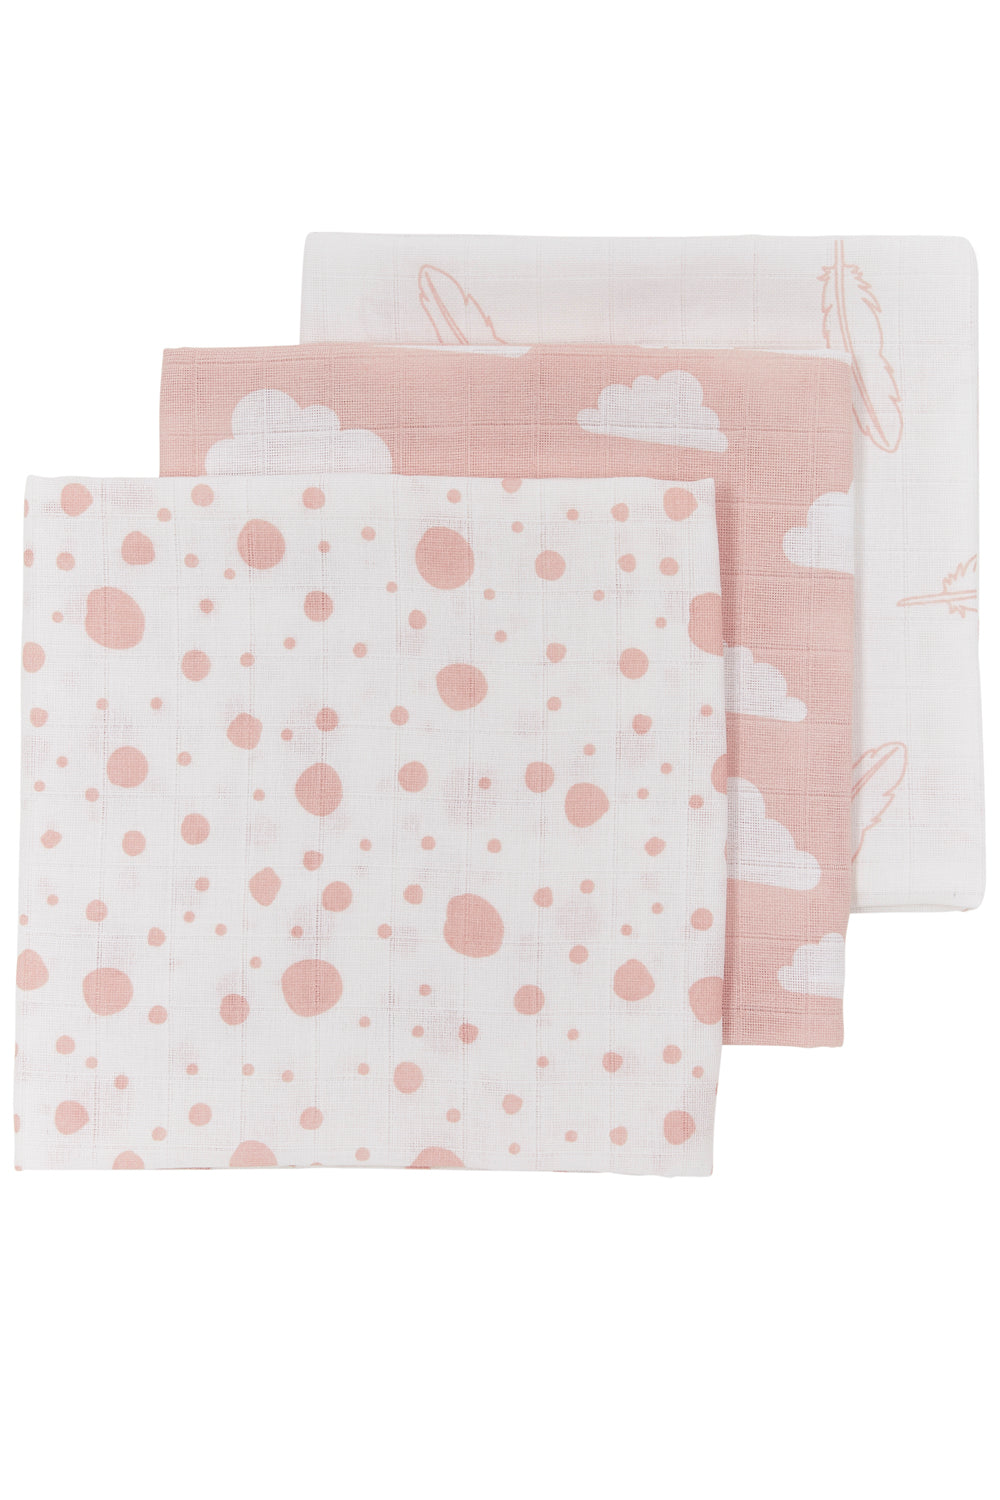 Hydrophilic Wash Cloths Feather Clous Dots Pink (3 pcs)